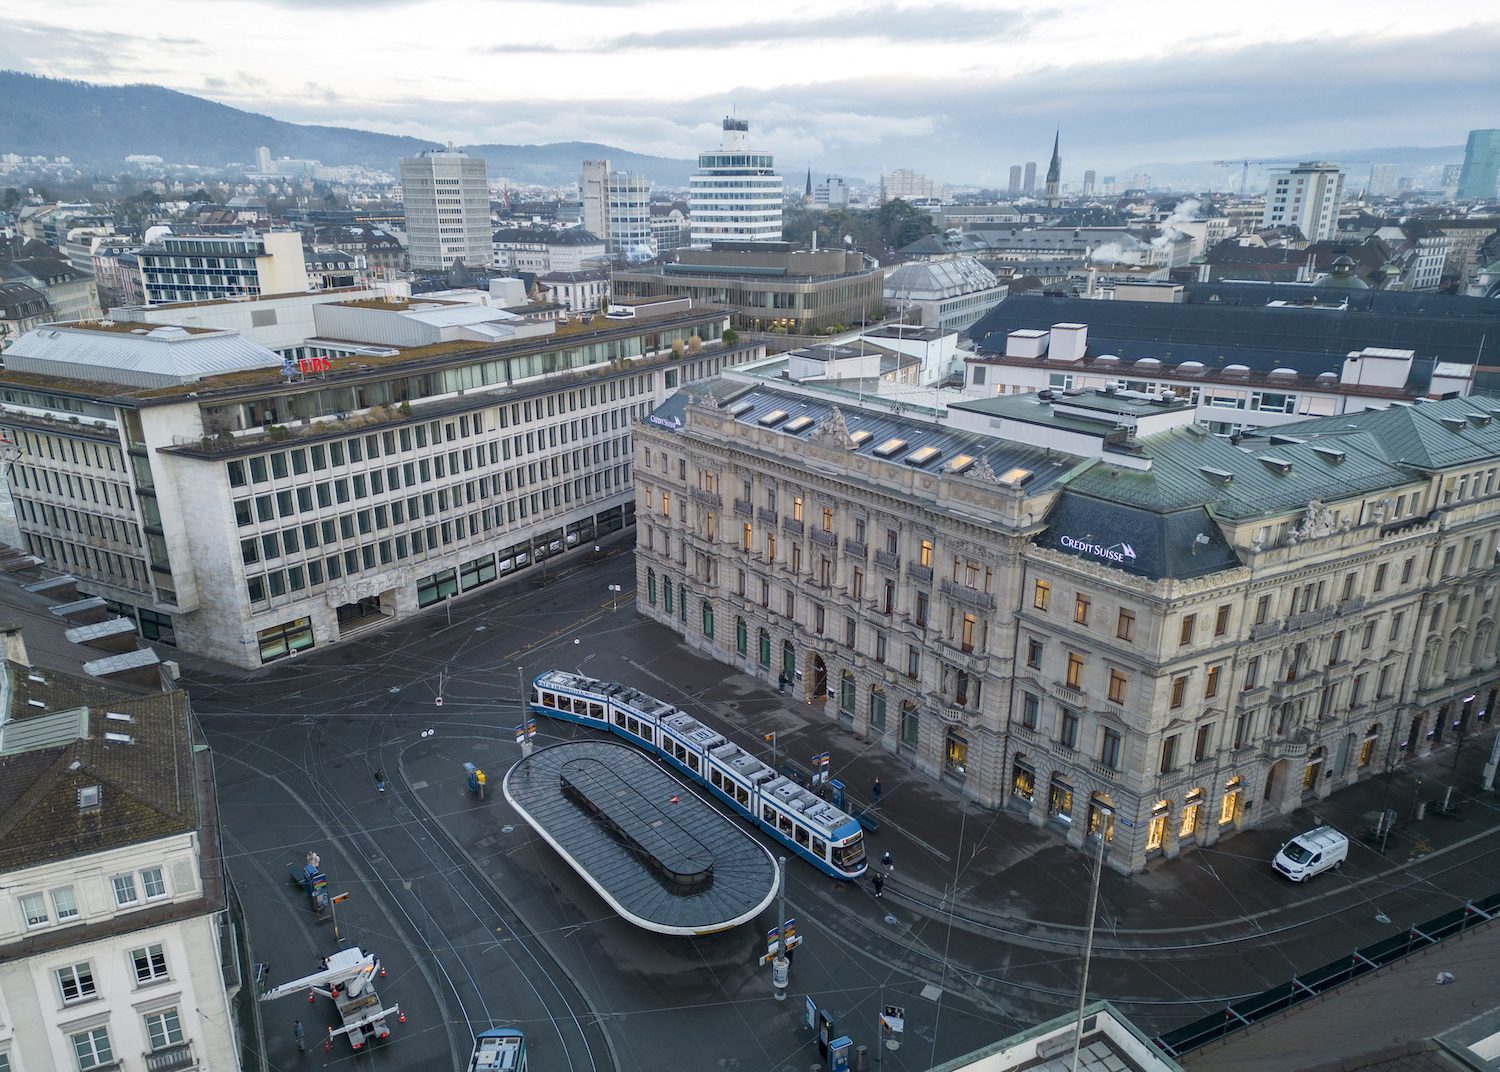 Switzerland wakes to new era after historic bank merger; employees ‘shocked’